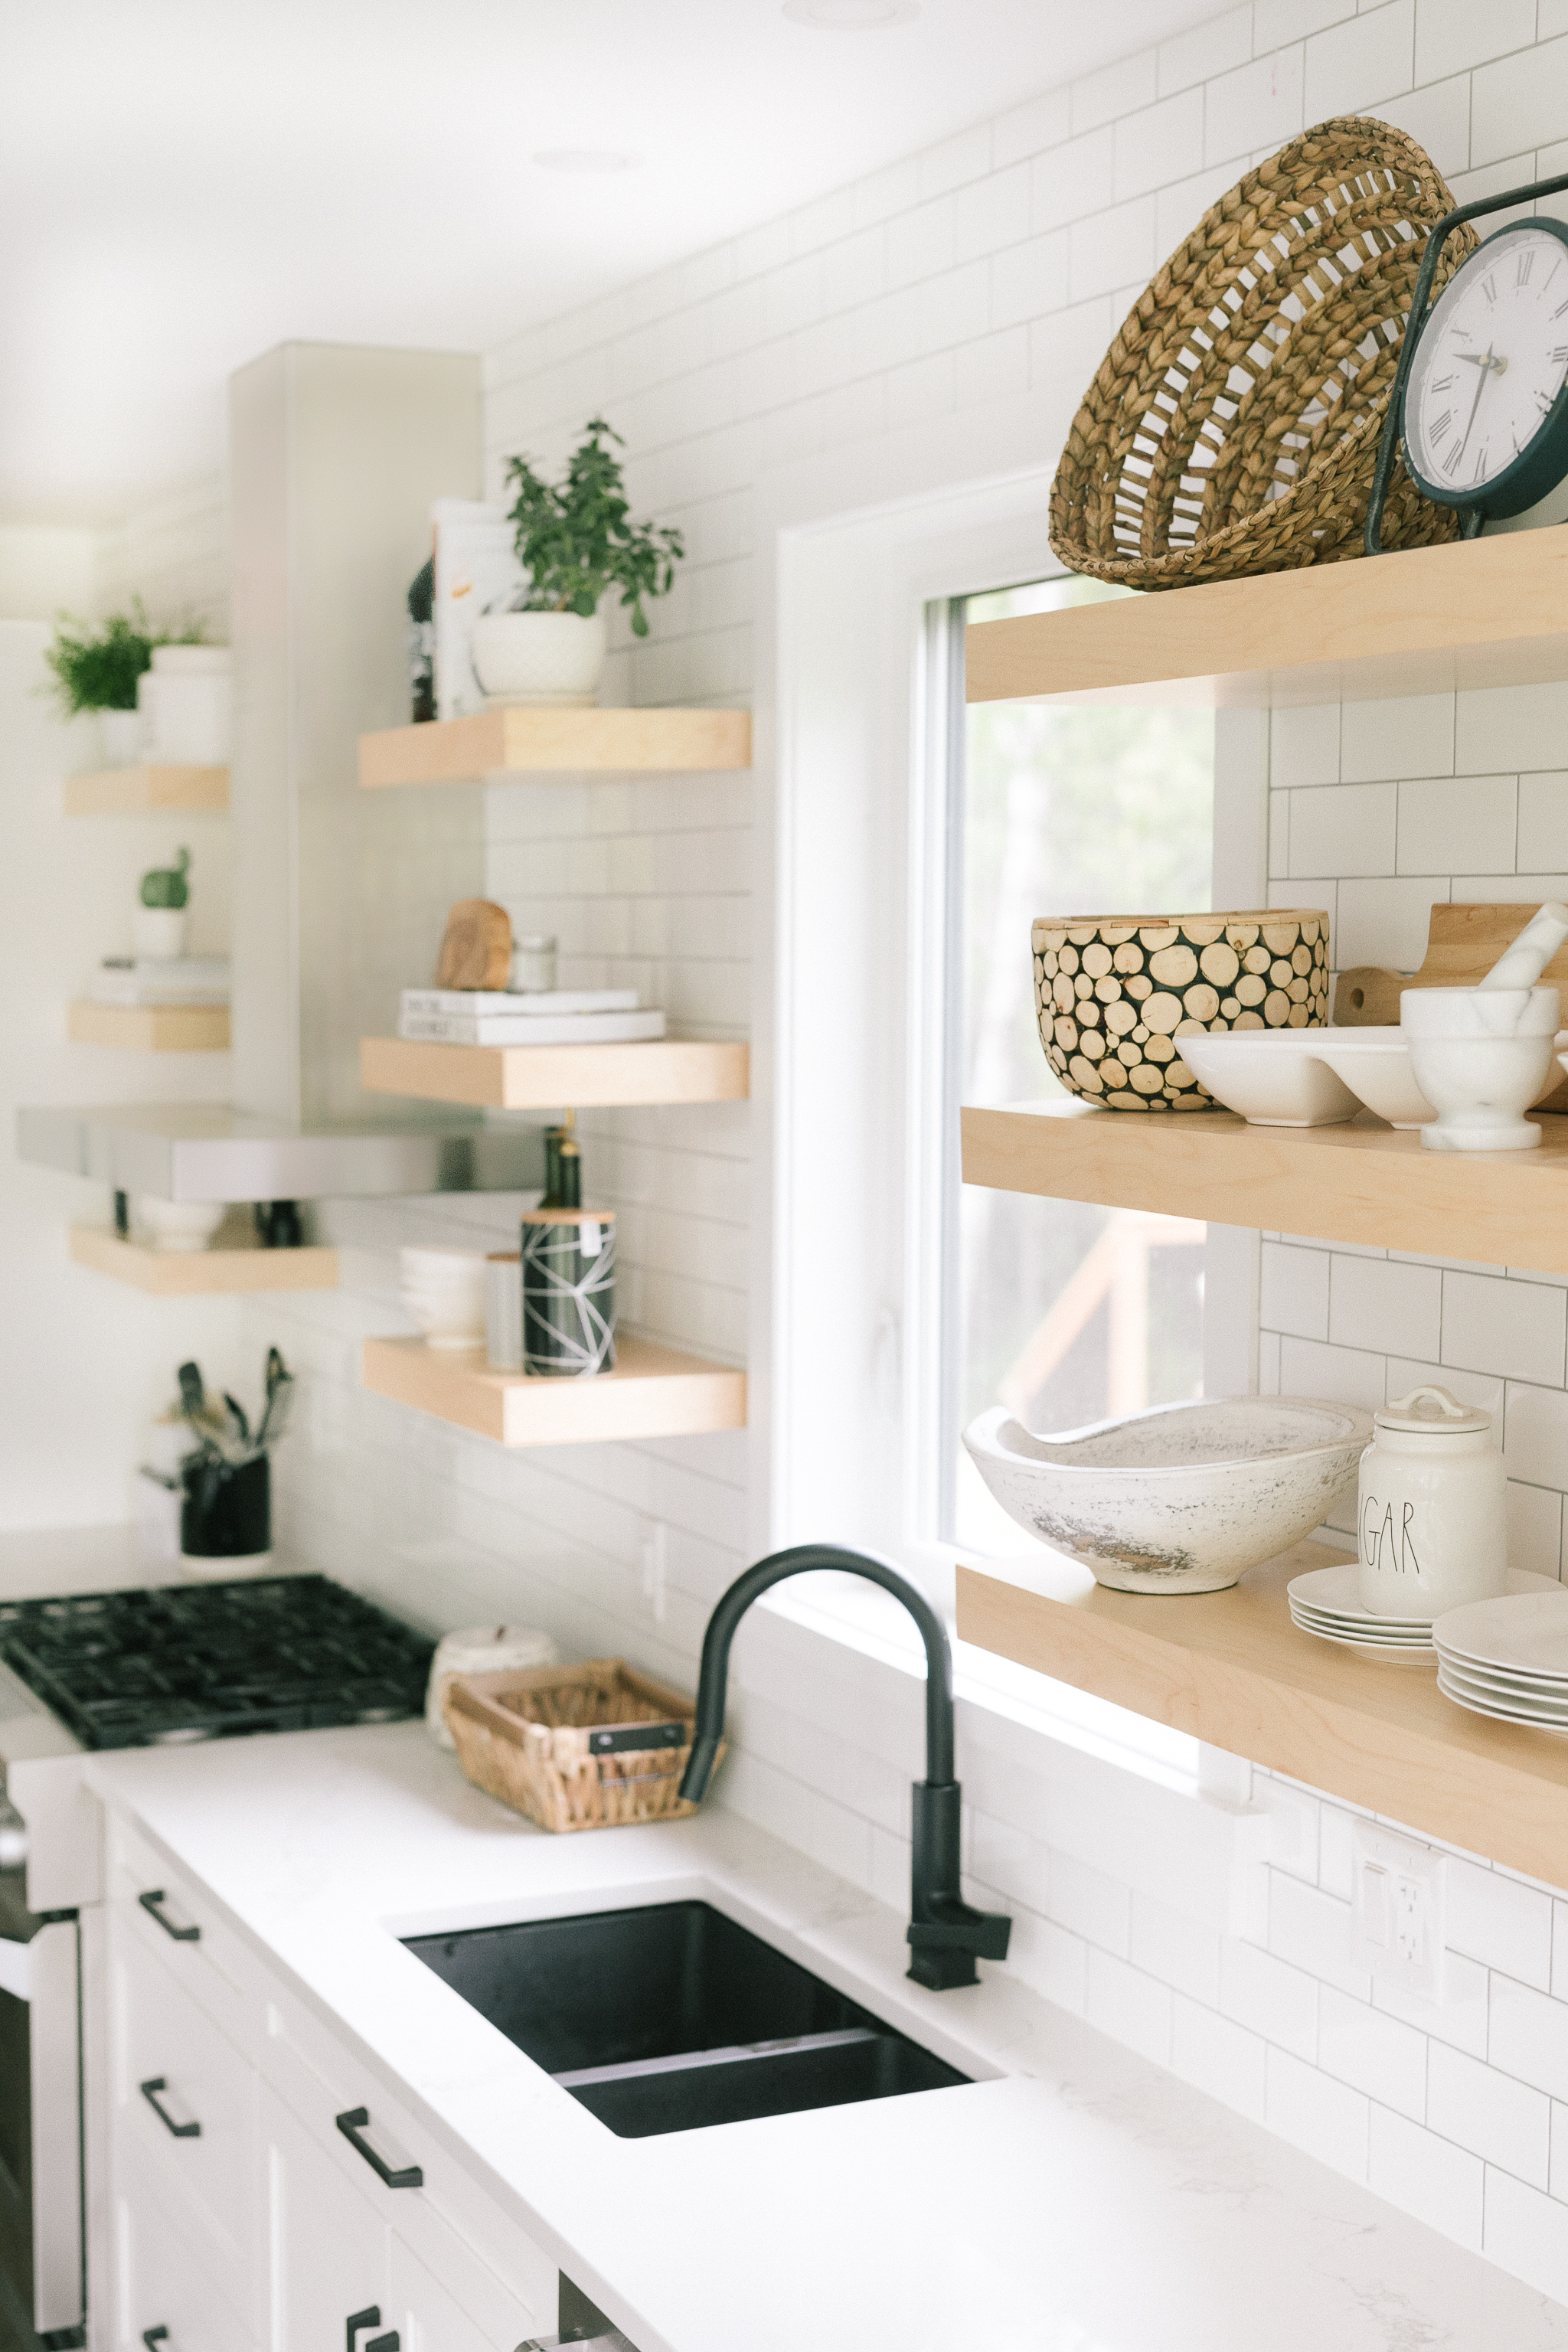 Interior-Design-Carp-Project-Kitchen-Bowls-Open-Shelfs